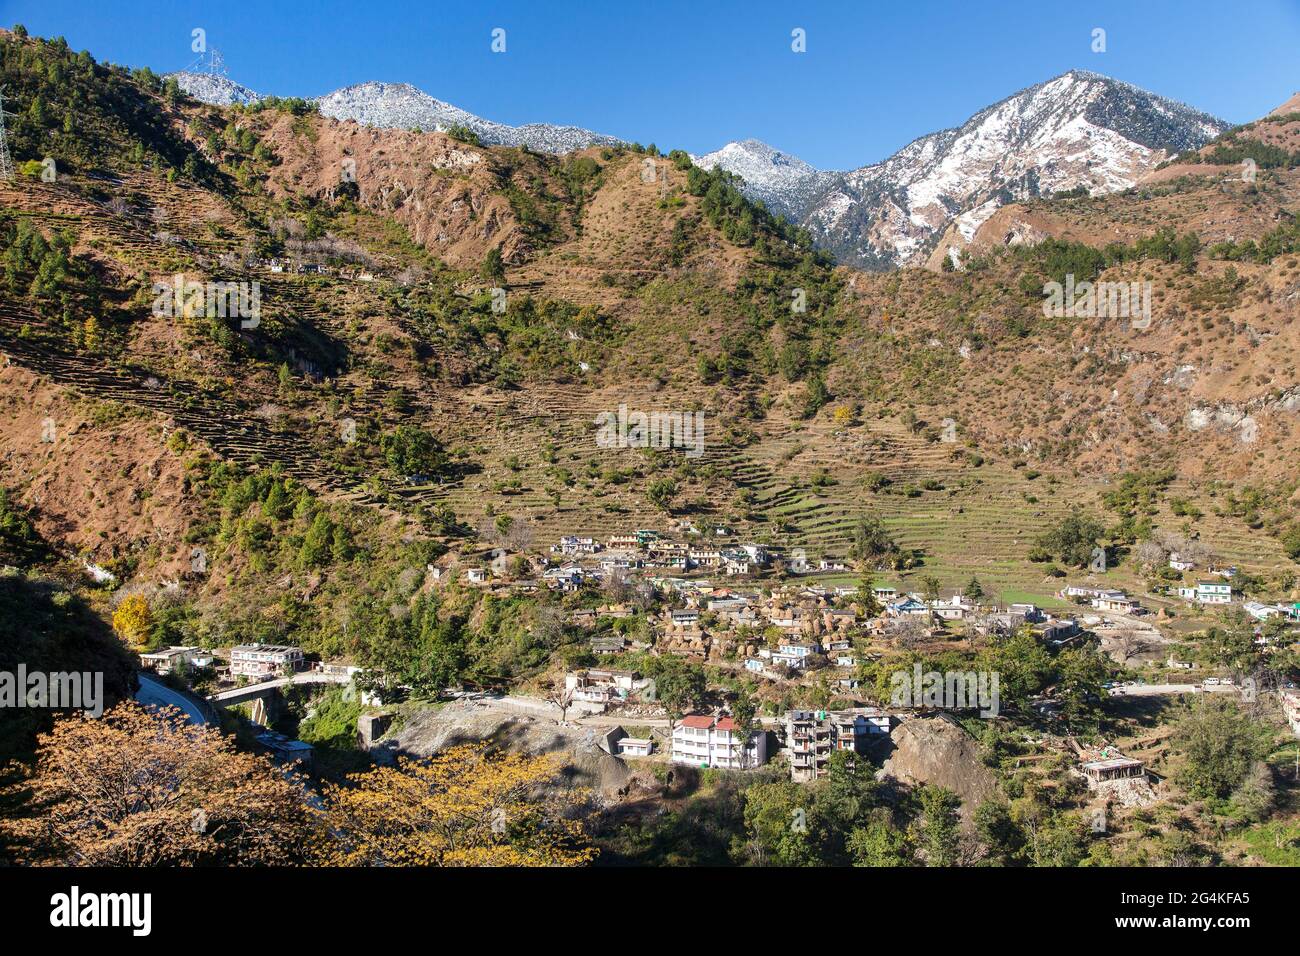 Terraced fields and village near Joshimath town in Uttarakhand India, Indian Himalayas mountains Stock Photo